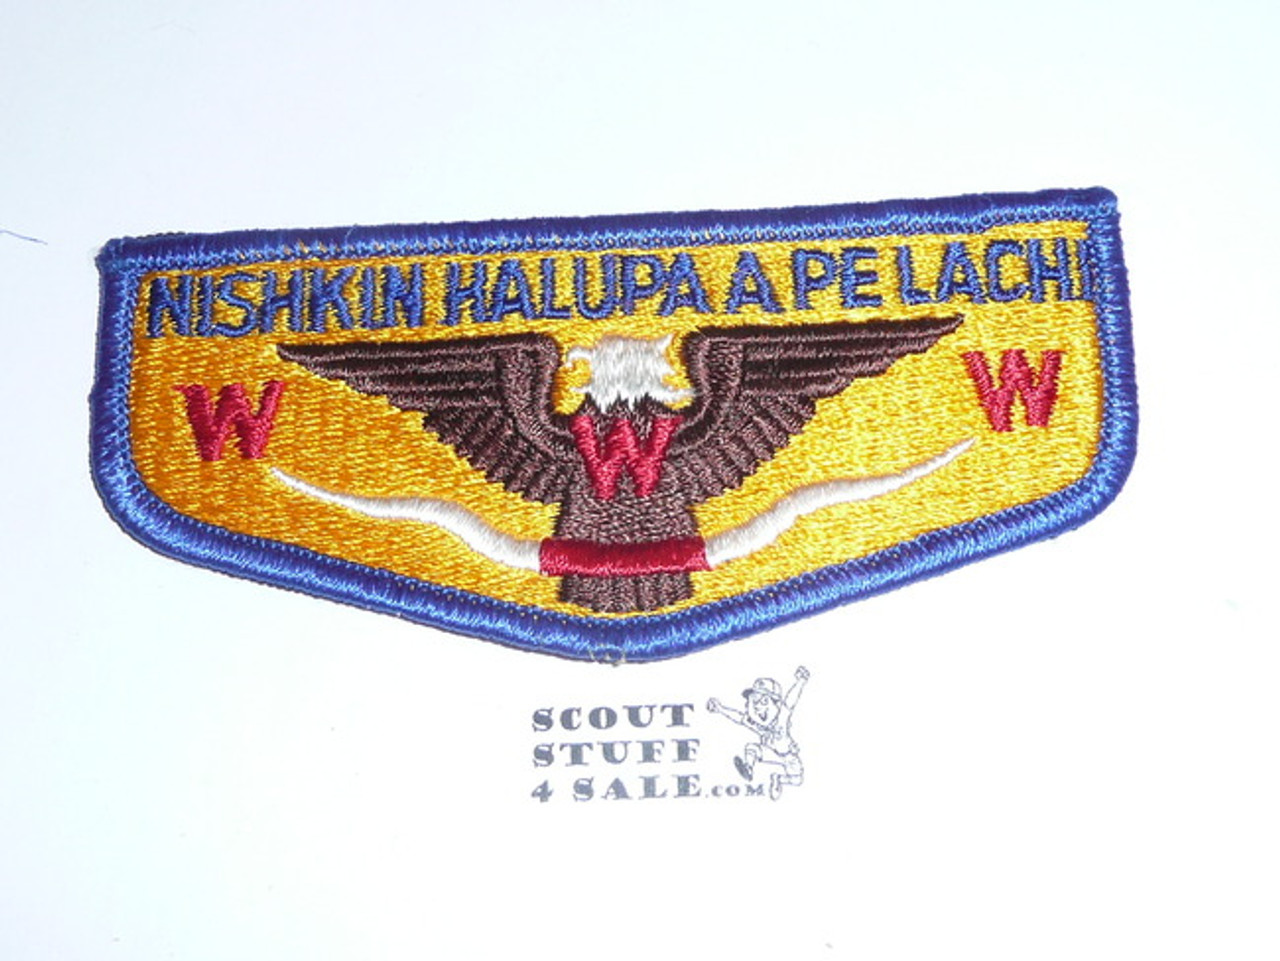 Order of the Arrow Lodge #489 Nishkin Halupa A Pe Lachi s2 Flap Patch